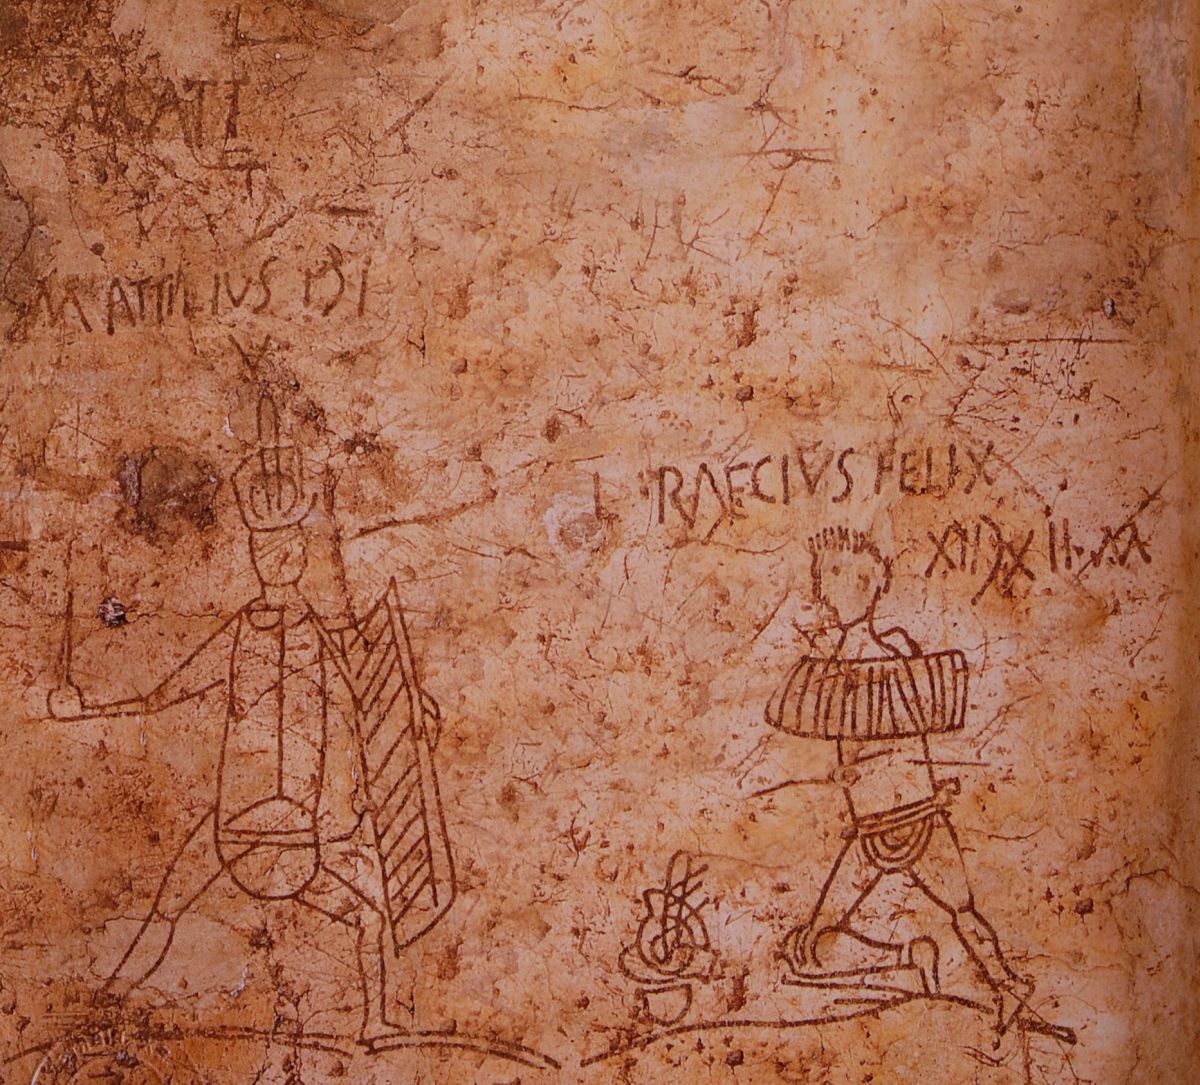 Graffiti from Pompeii